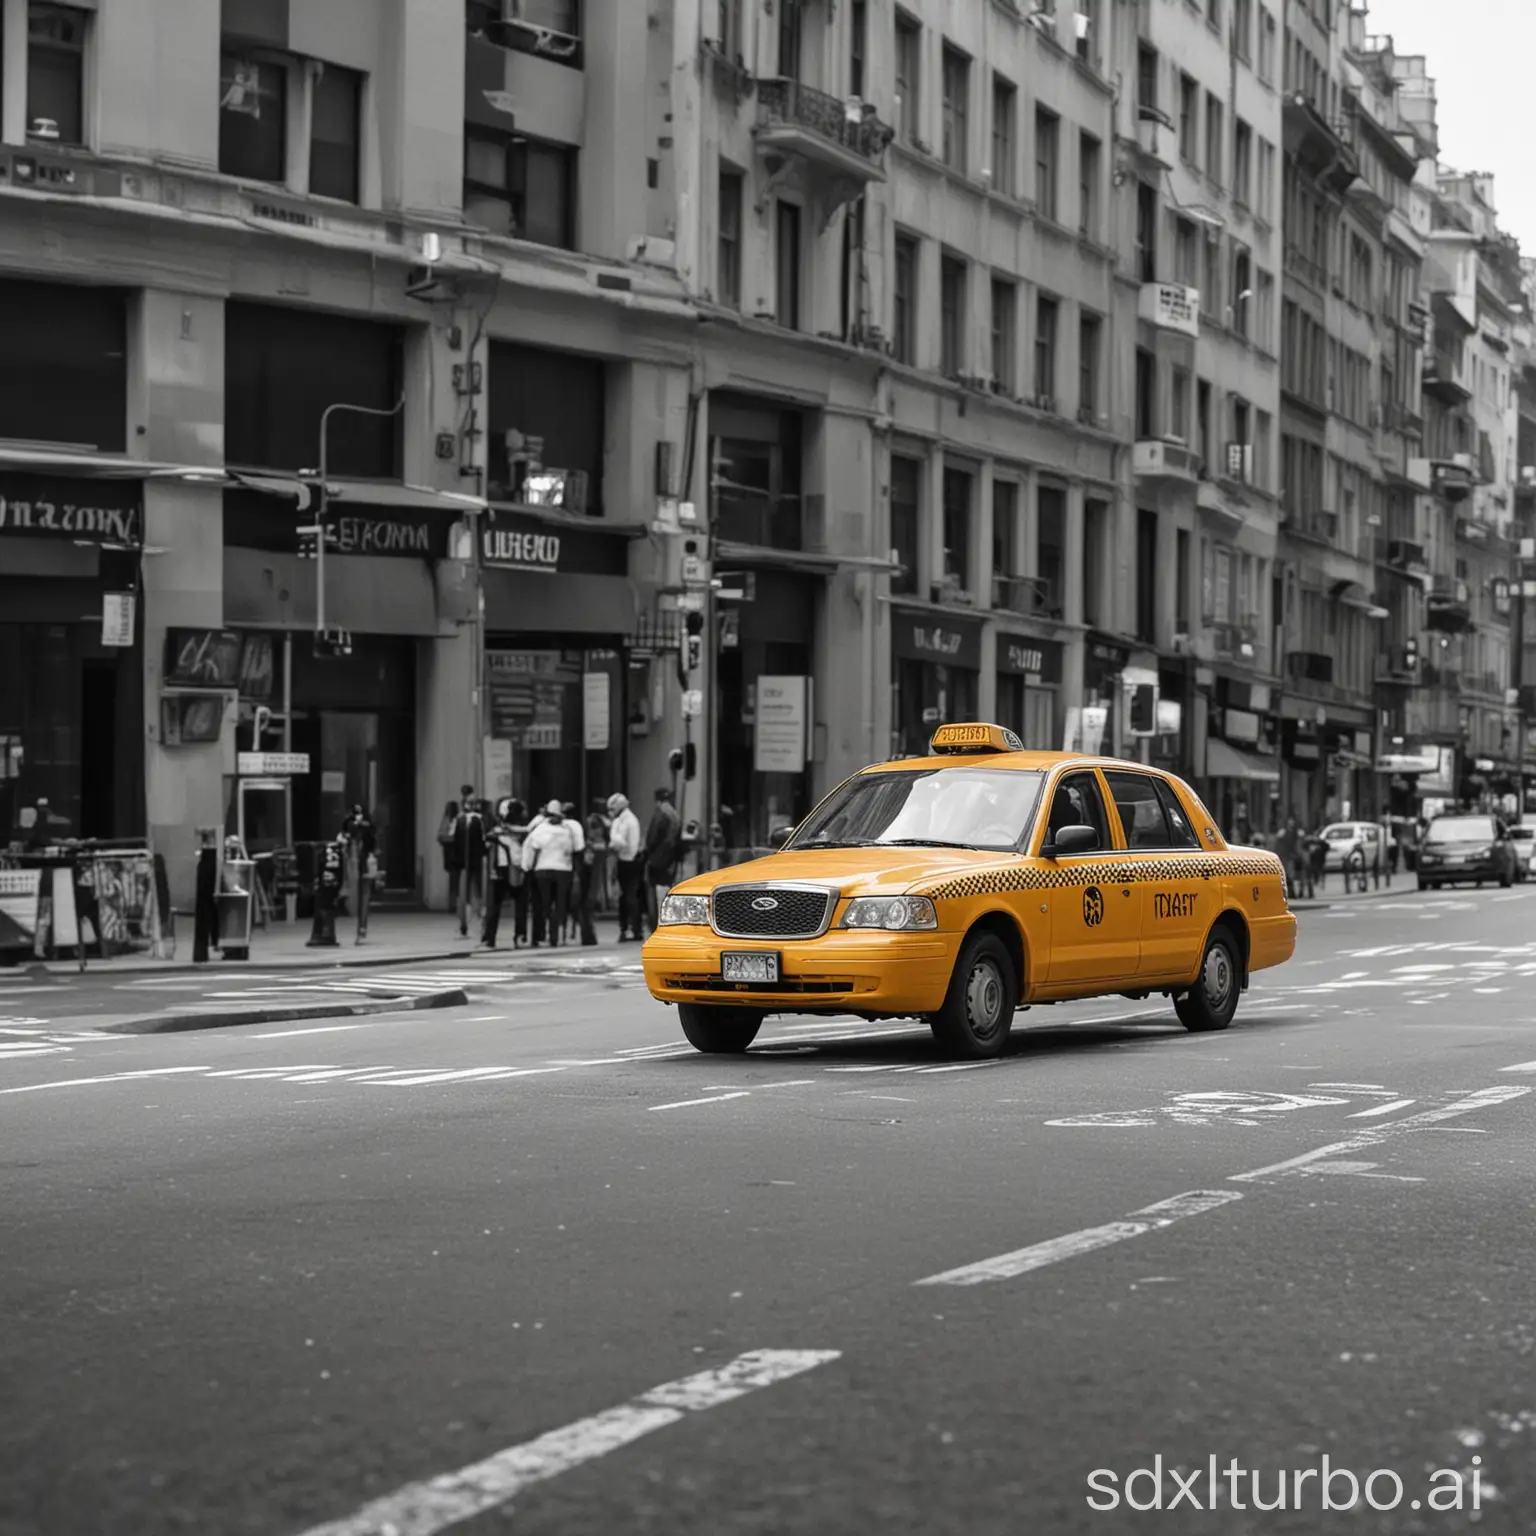 City-Taxi-Car-Driving-Through-Urban-Streets